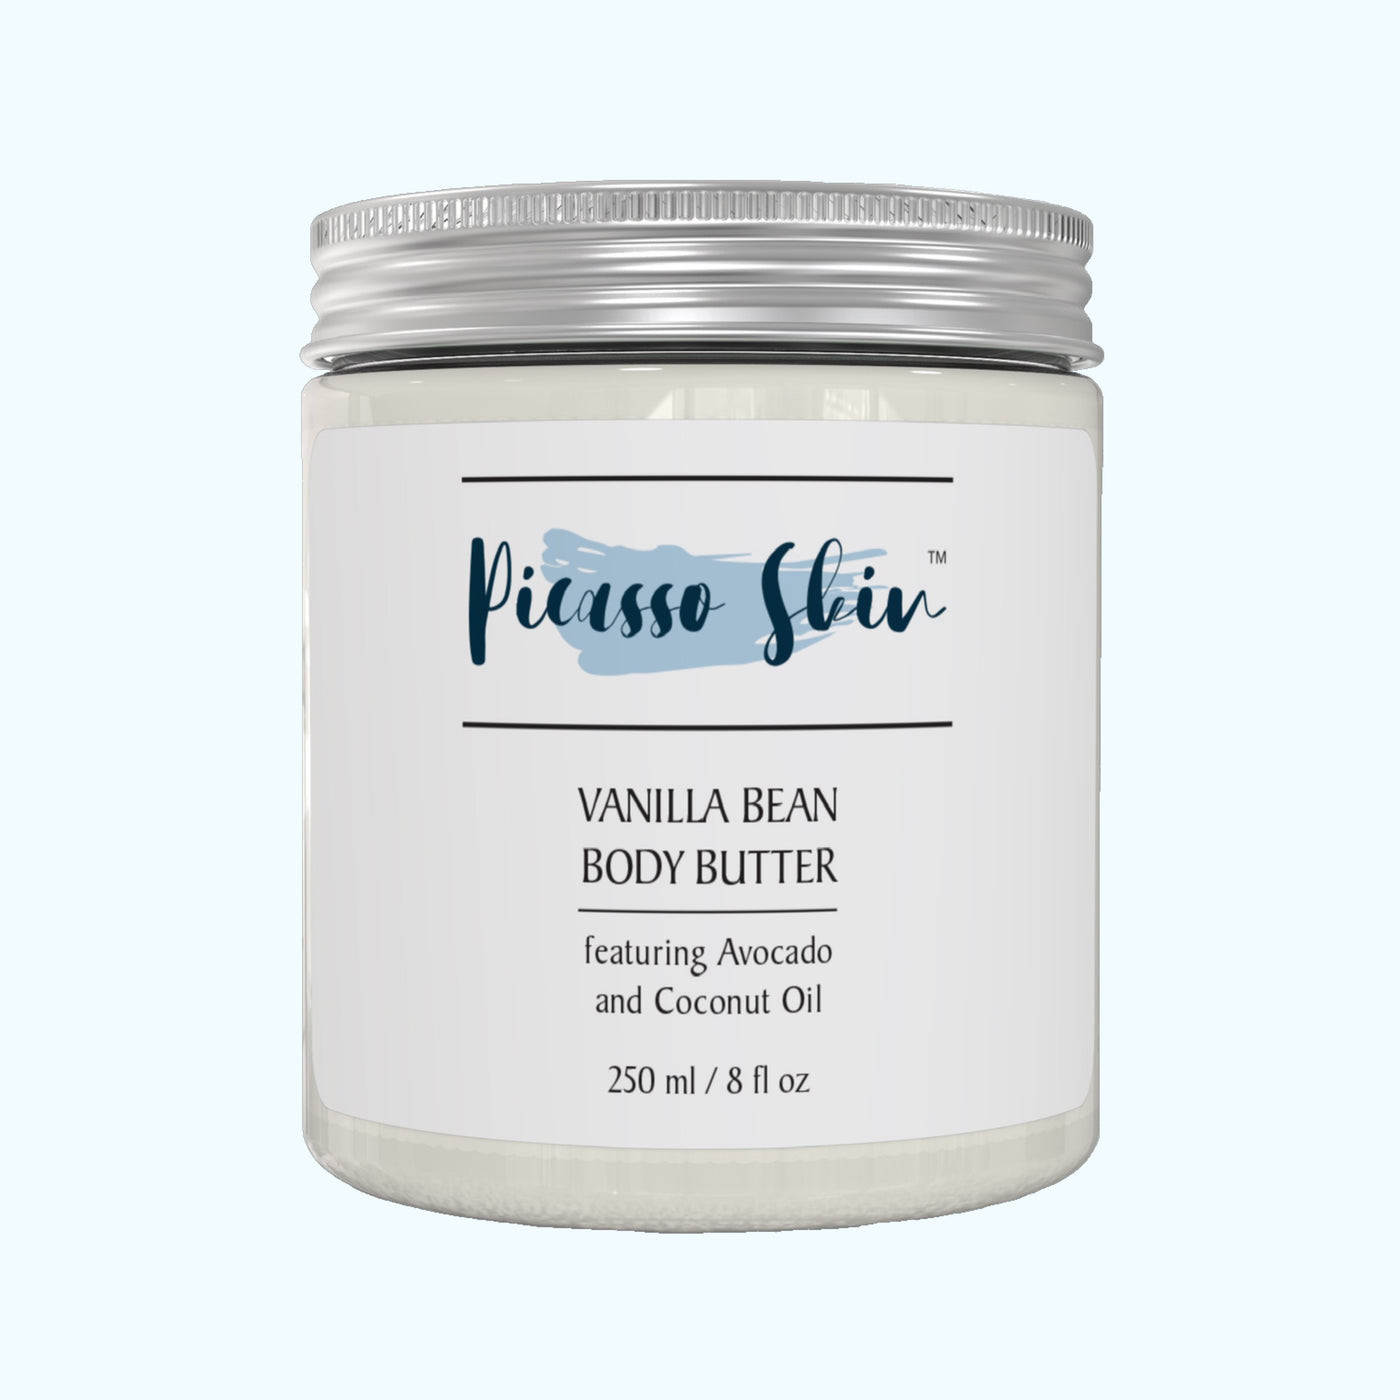 Vanilla Bean Body Butter - 250ml/8 fl oz